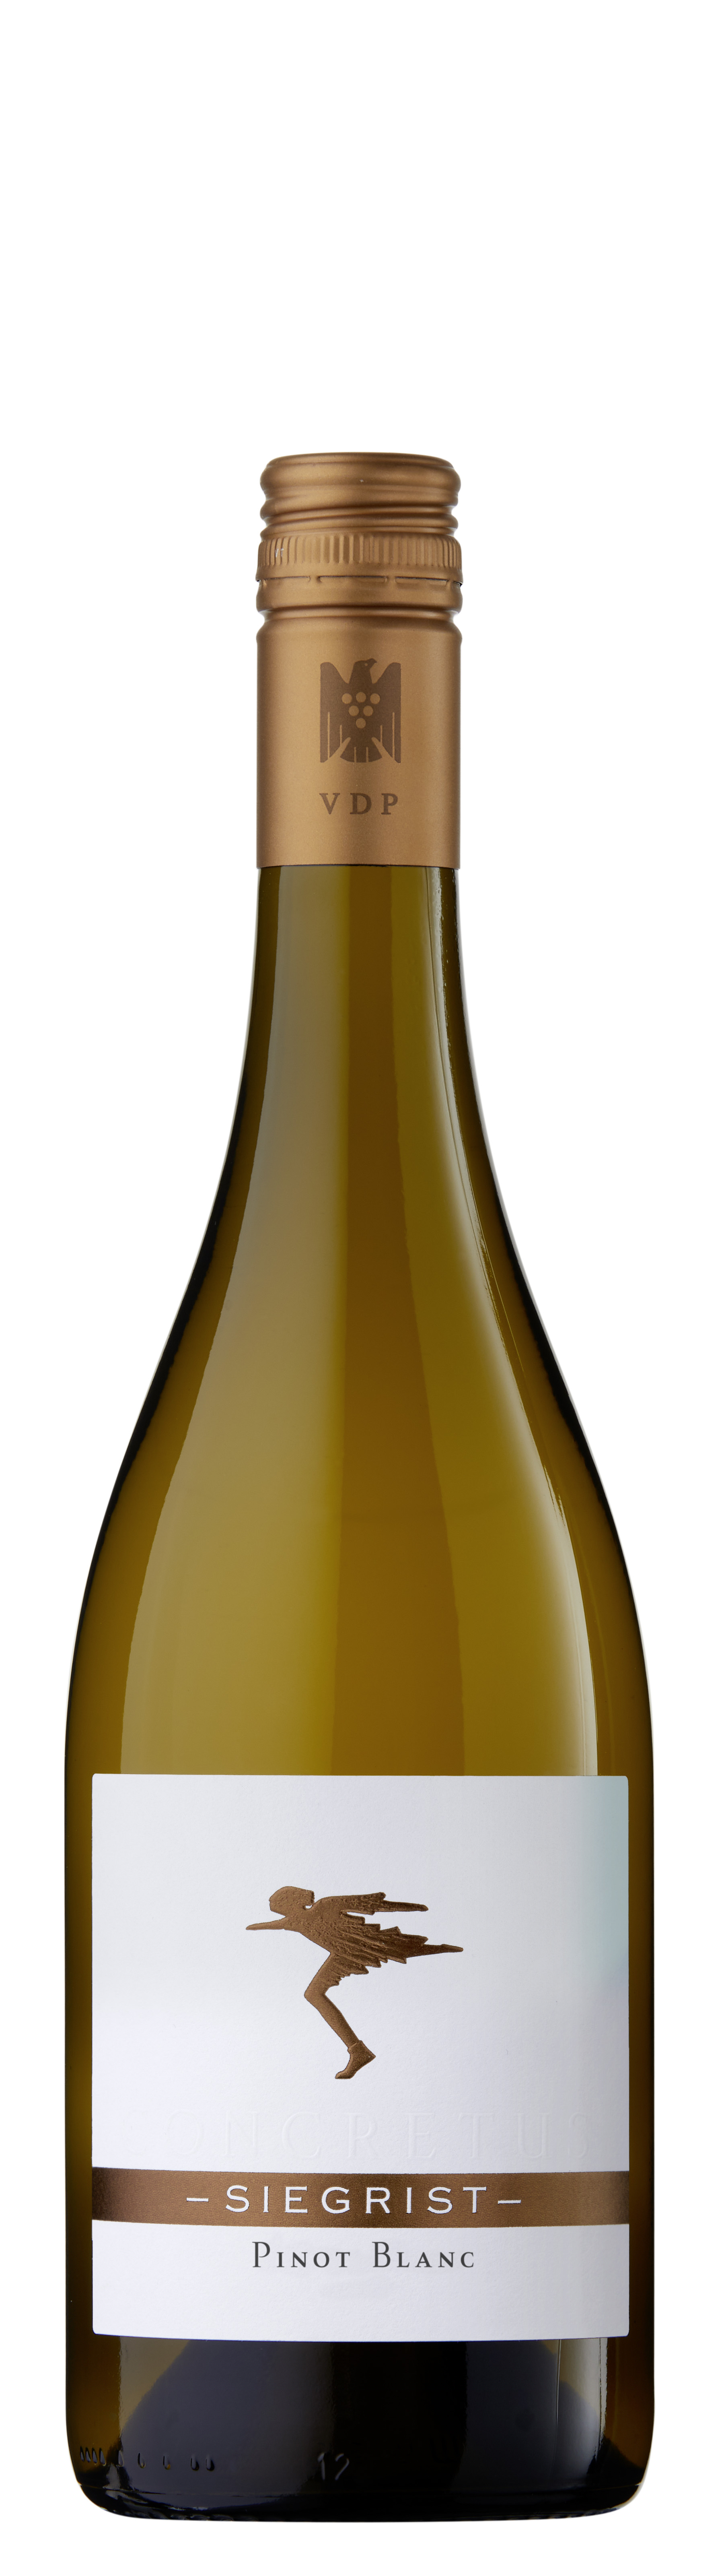 2020 Leinsweiler Pinot Blanc trocken VDP.Ortswein 0,75 L - Weingut Siegrist